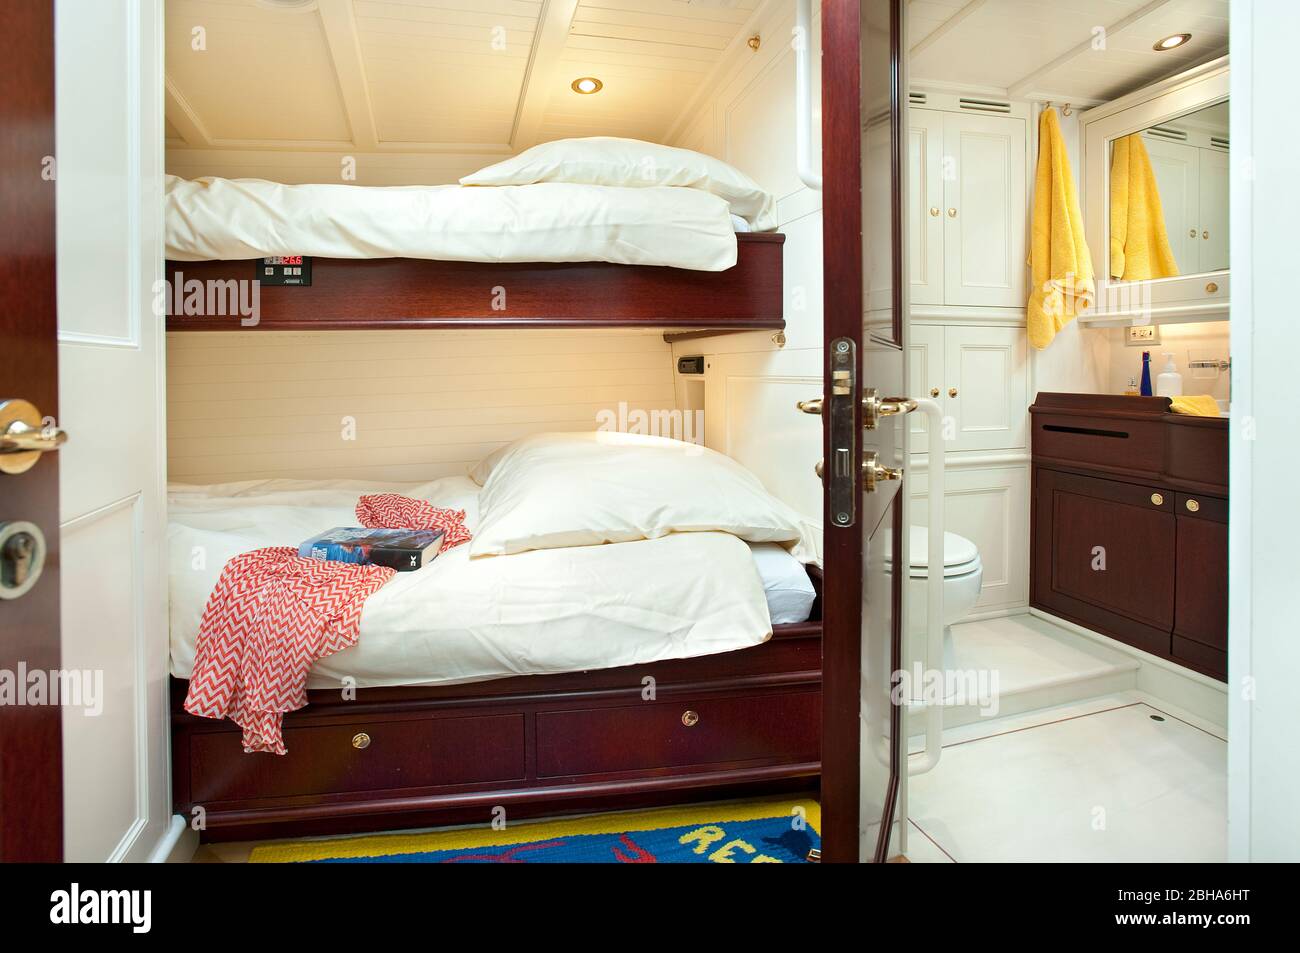 Bunk beds cabin fotografías e imágenes de alta resolución - Alamy